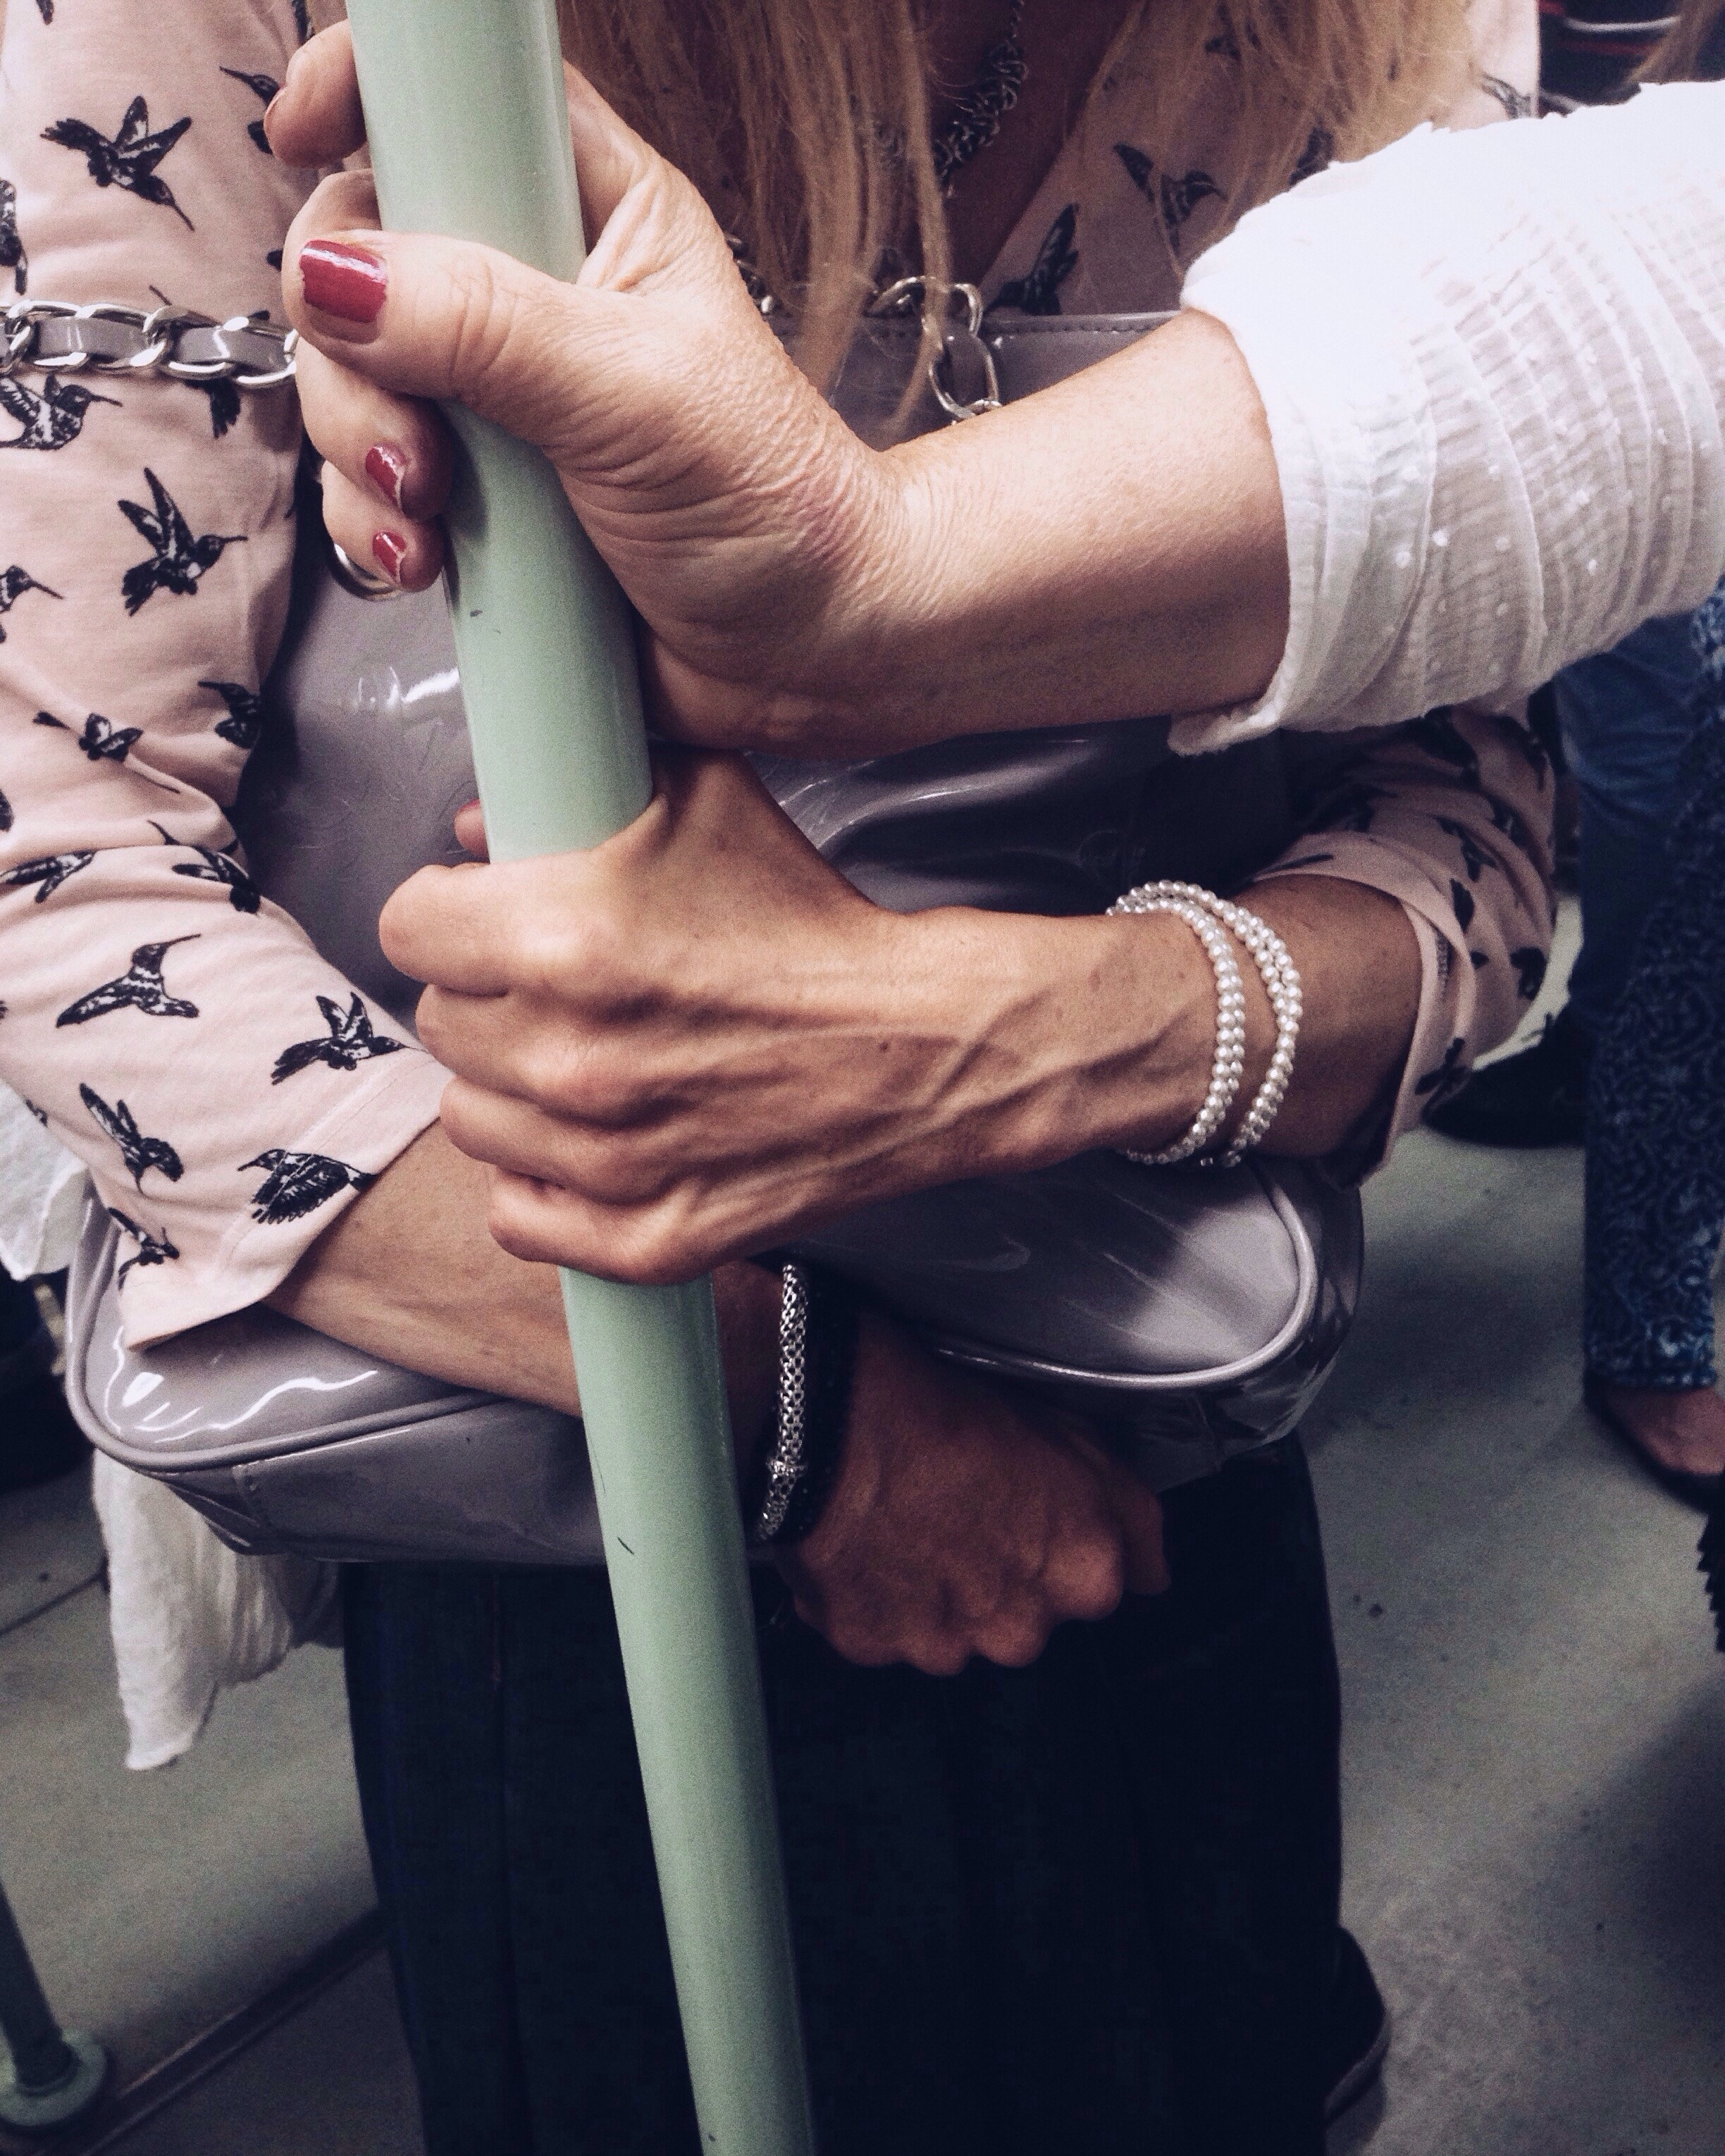 A woman clutching her handbag while holding onto a pole on a train